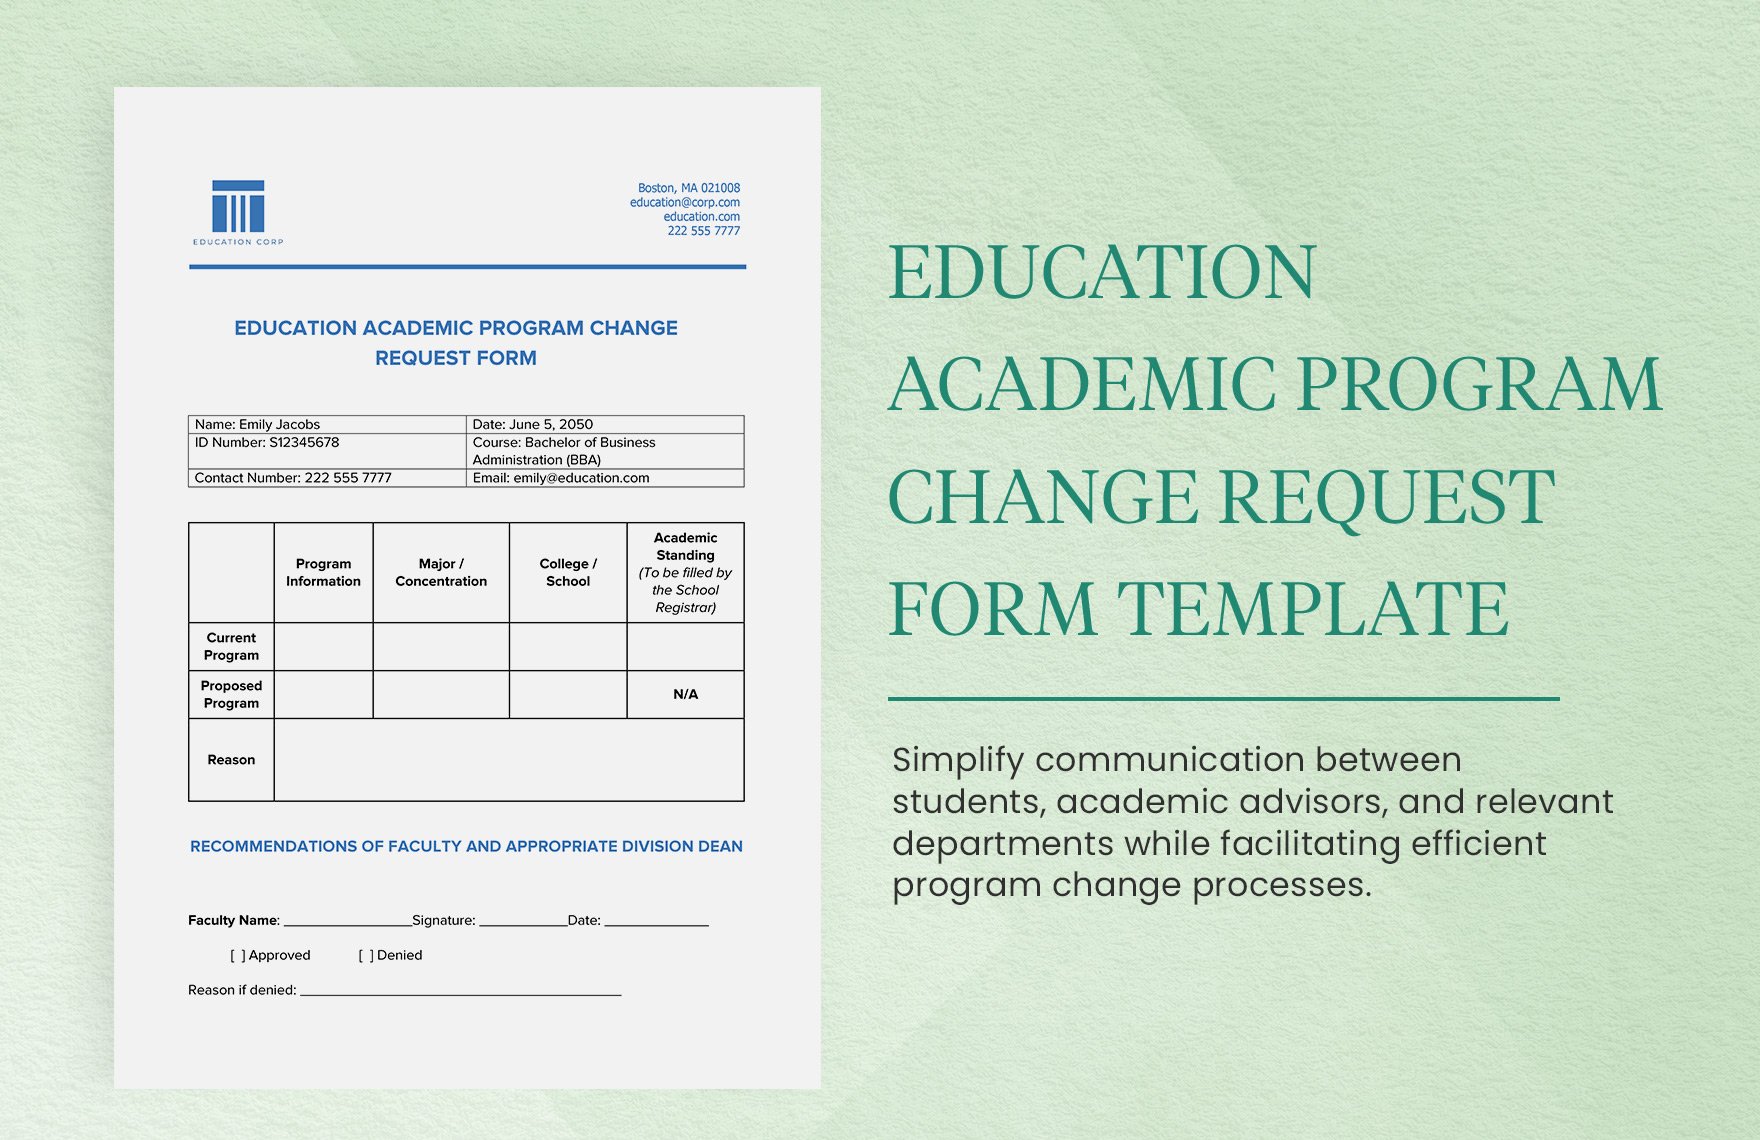 Education Academic Program Change Request Form Template